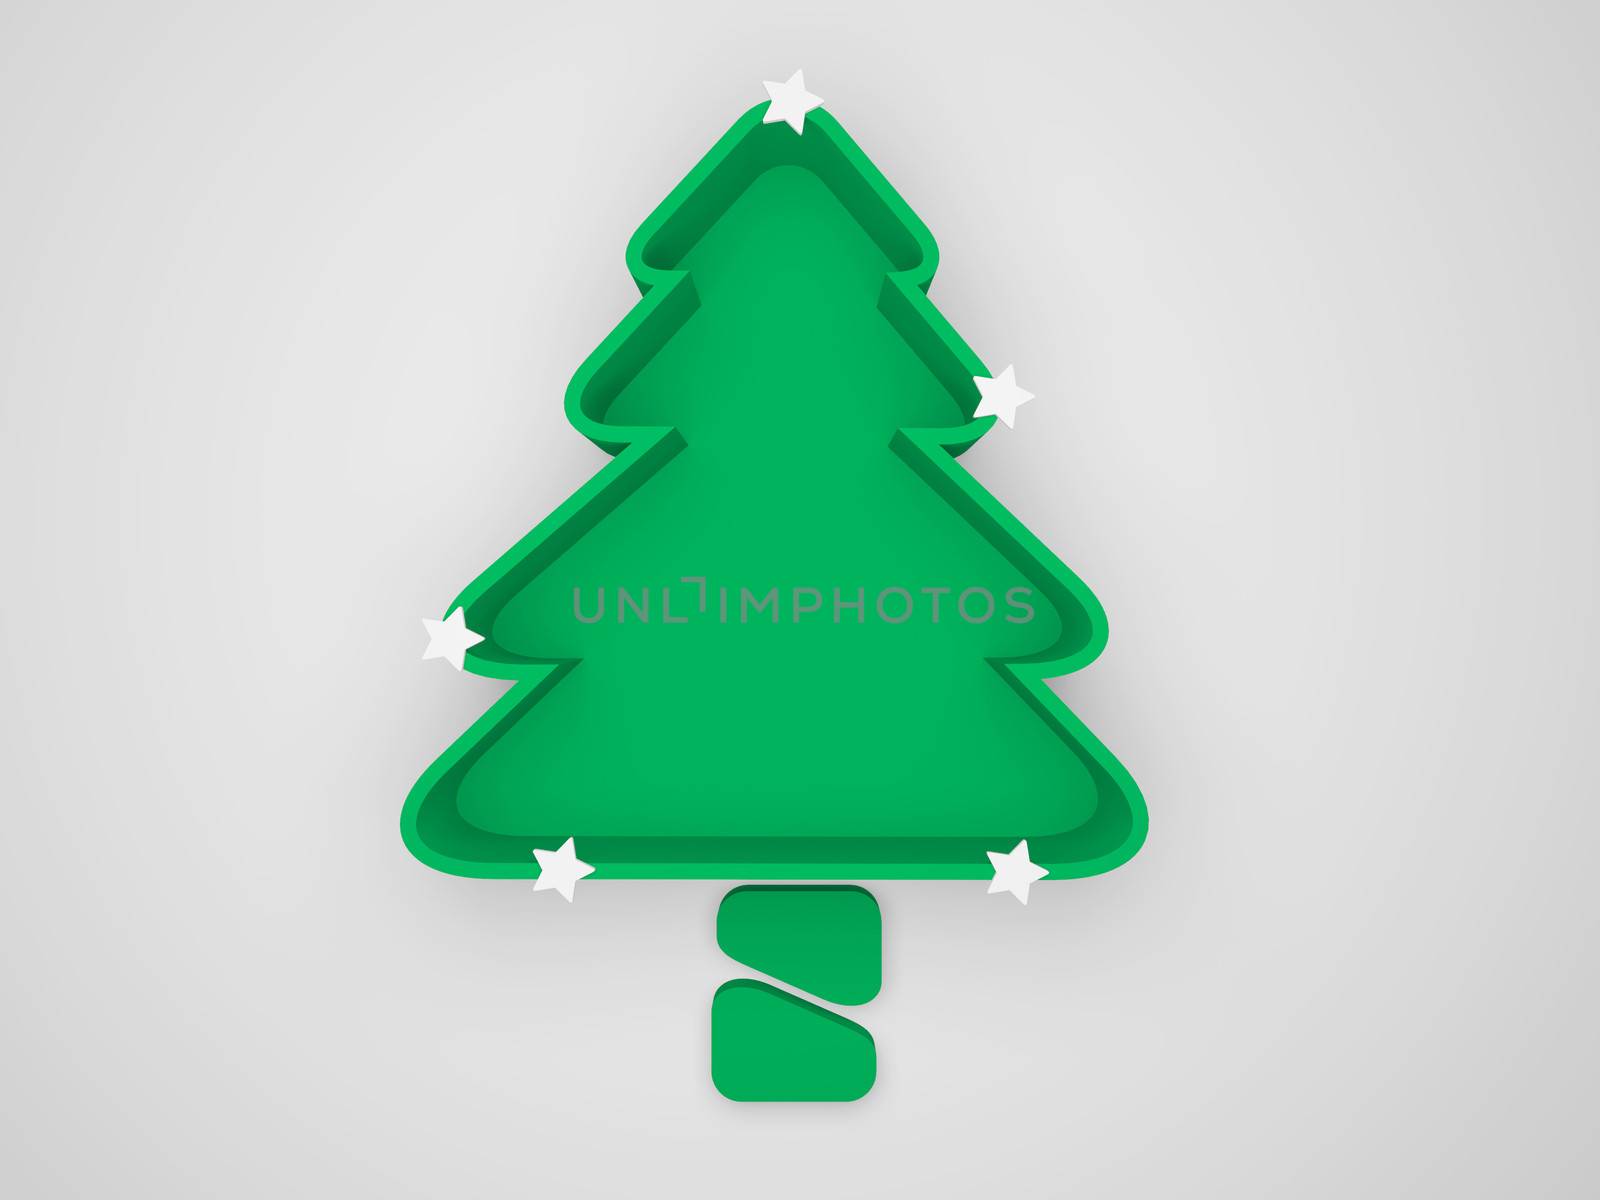 conceptually green christmas tree for save environment and energy